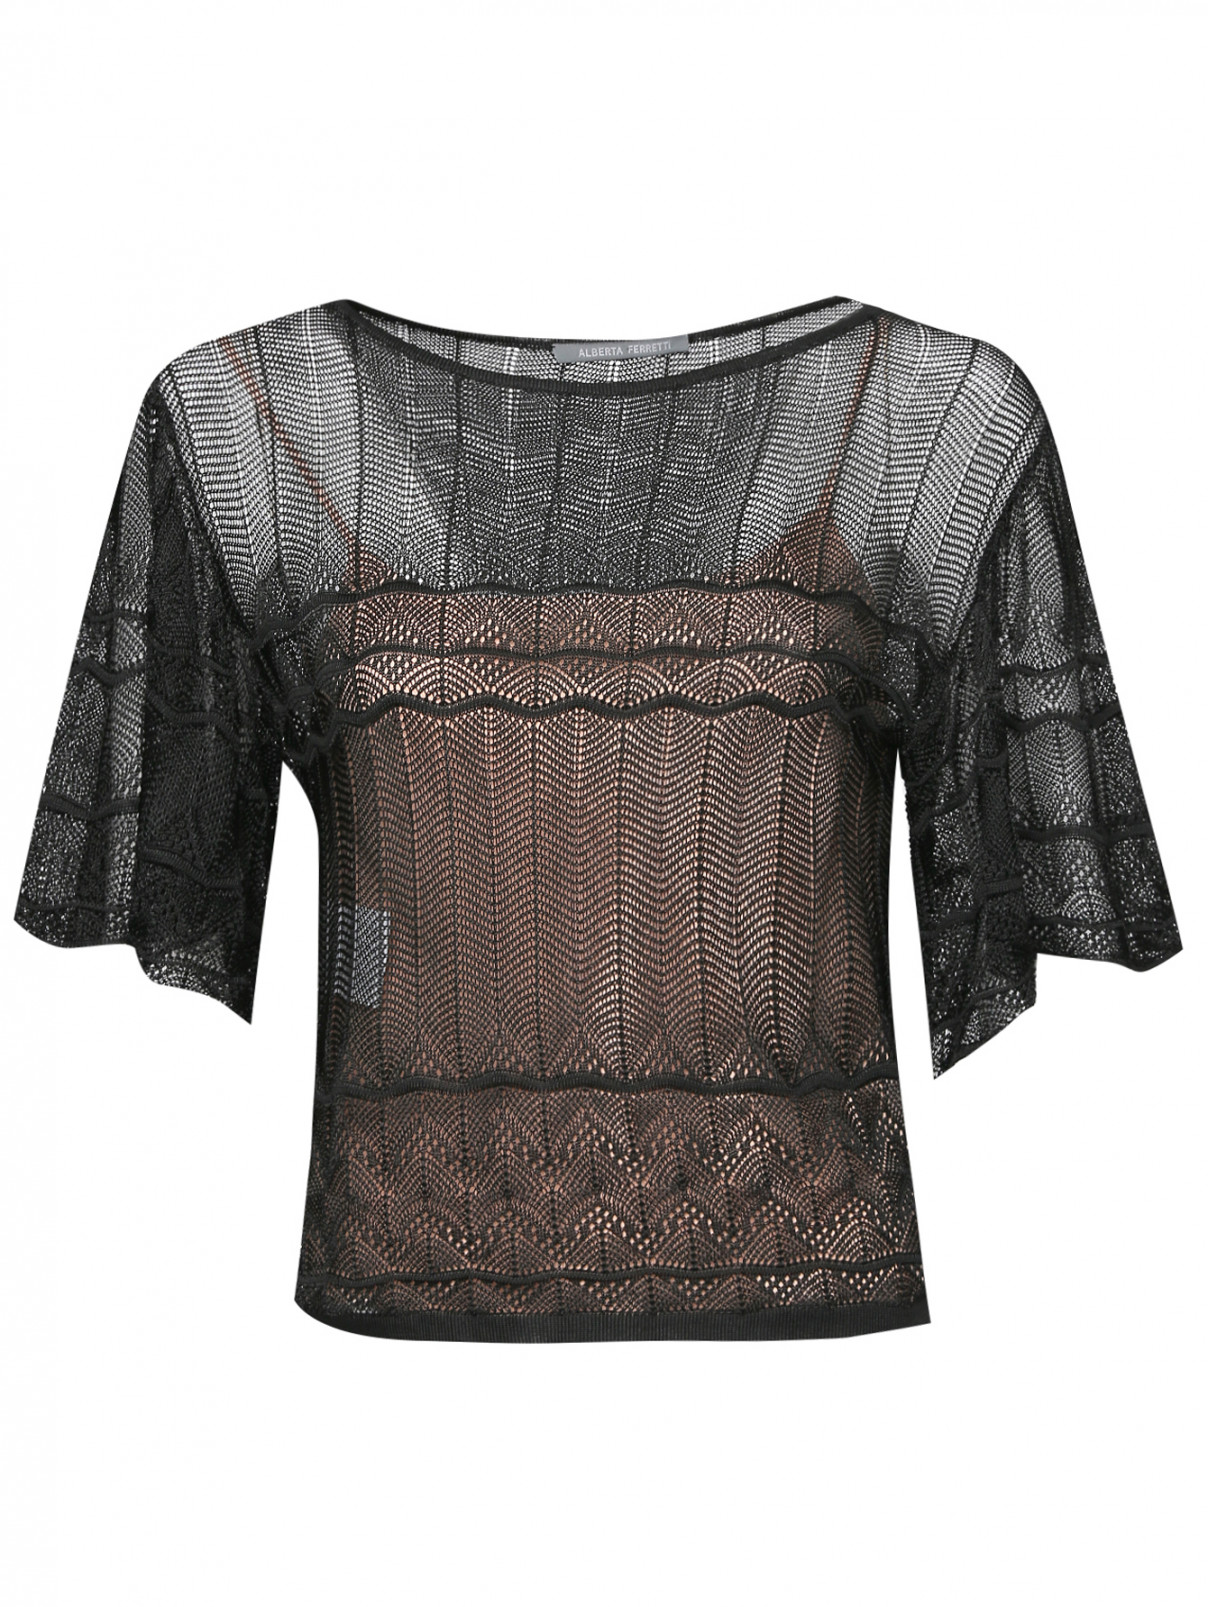 Блуза с короткими рукавами Alberta Ferretti  –  Общий вид  – Цвет:  Черный